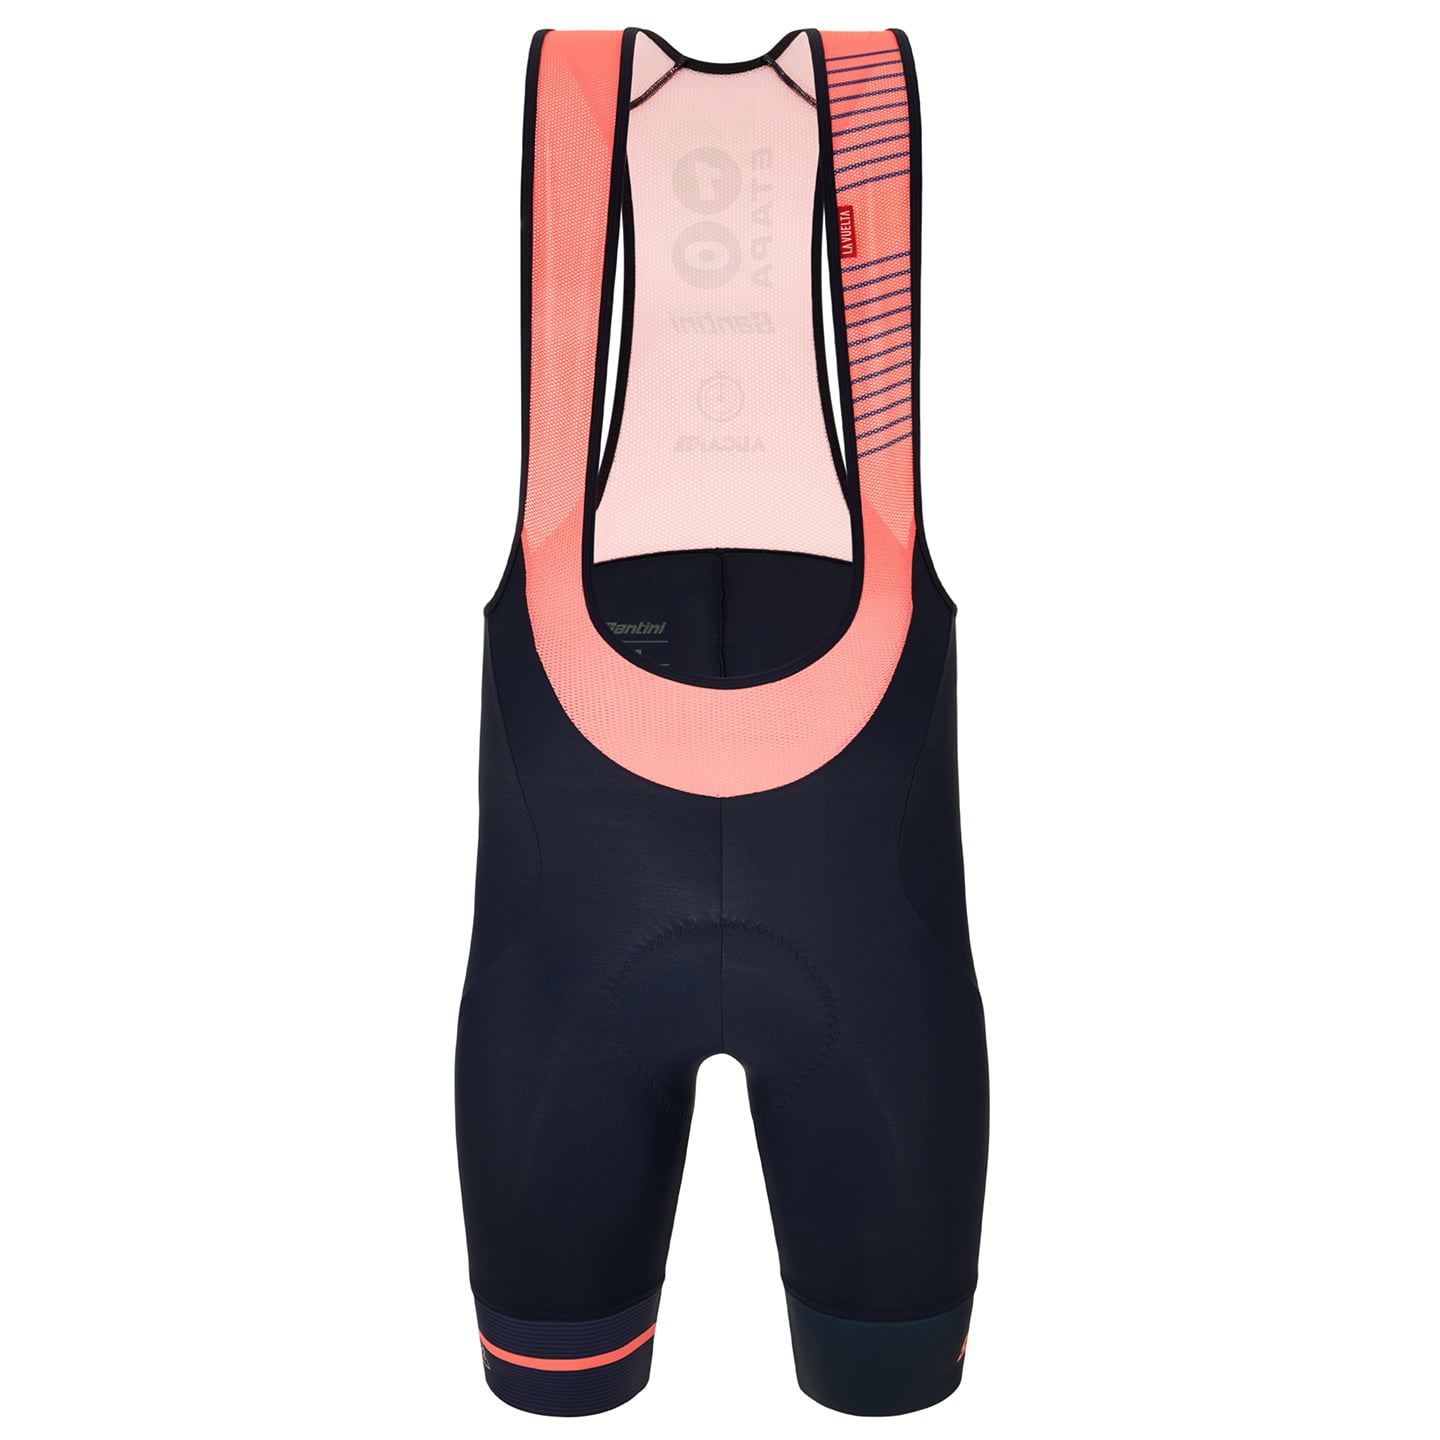 LA VUELTA Alicante 2022 Bib Shorts, for men, size 2XL, Cycle trousers, Cycle gear